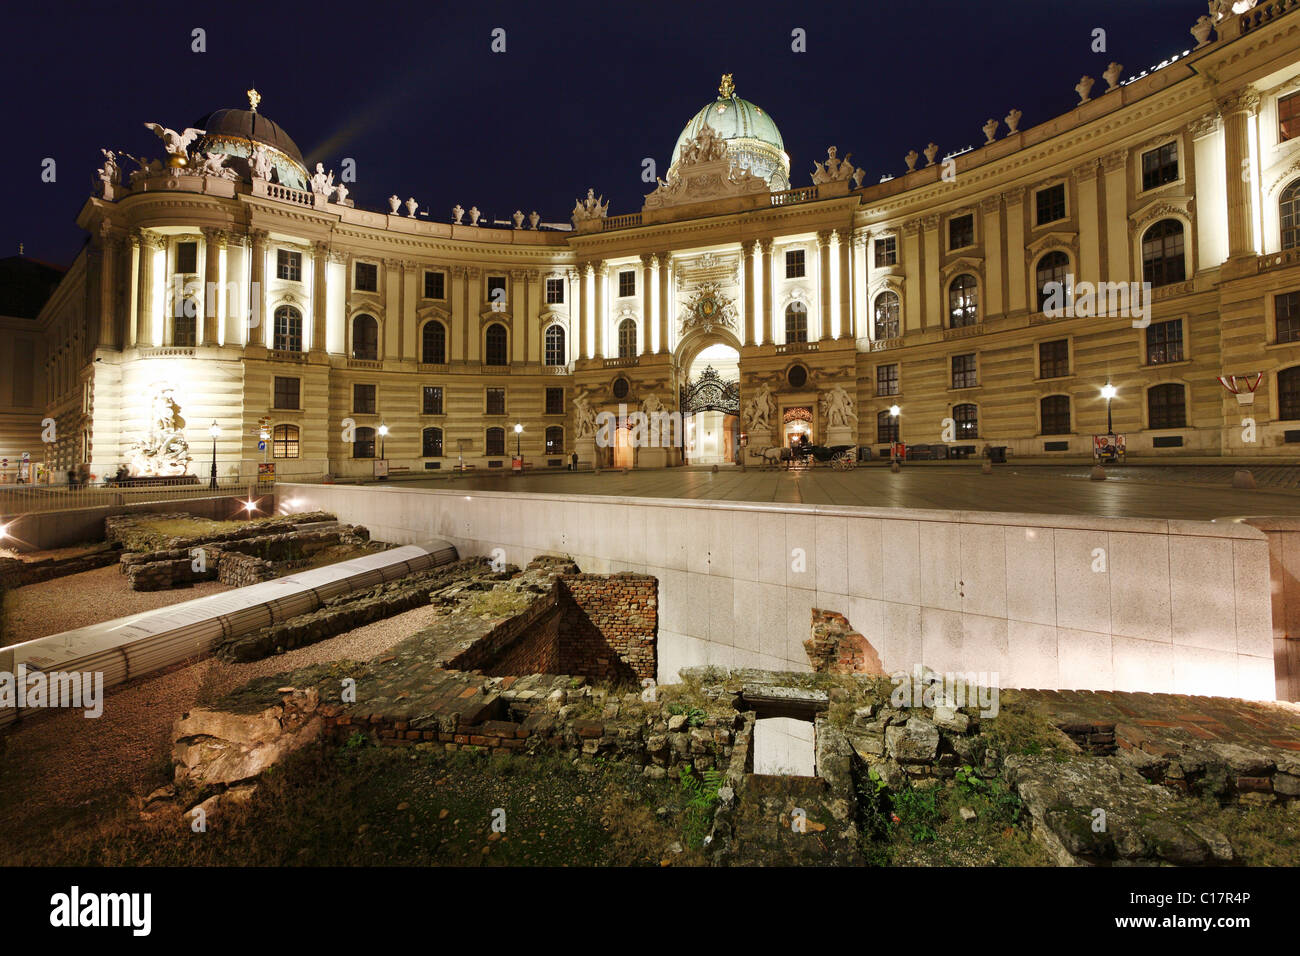 Archaeological excavations on Michaelerplatz, Michaeler tract of Hofburg Imperial Palace, Alte Hofburg, Vienna, Austria, Europe Stock Photo